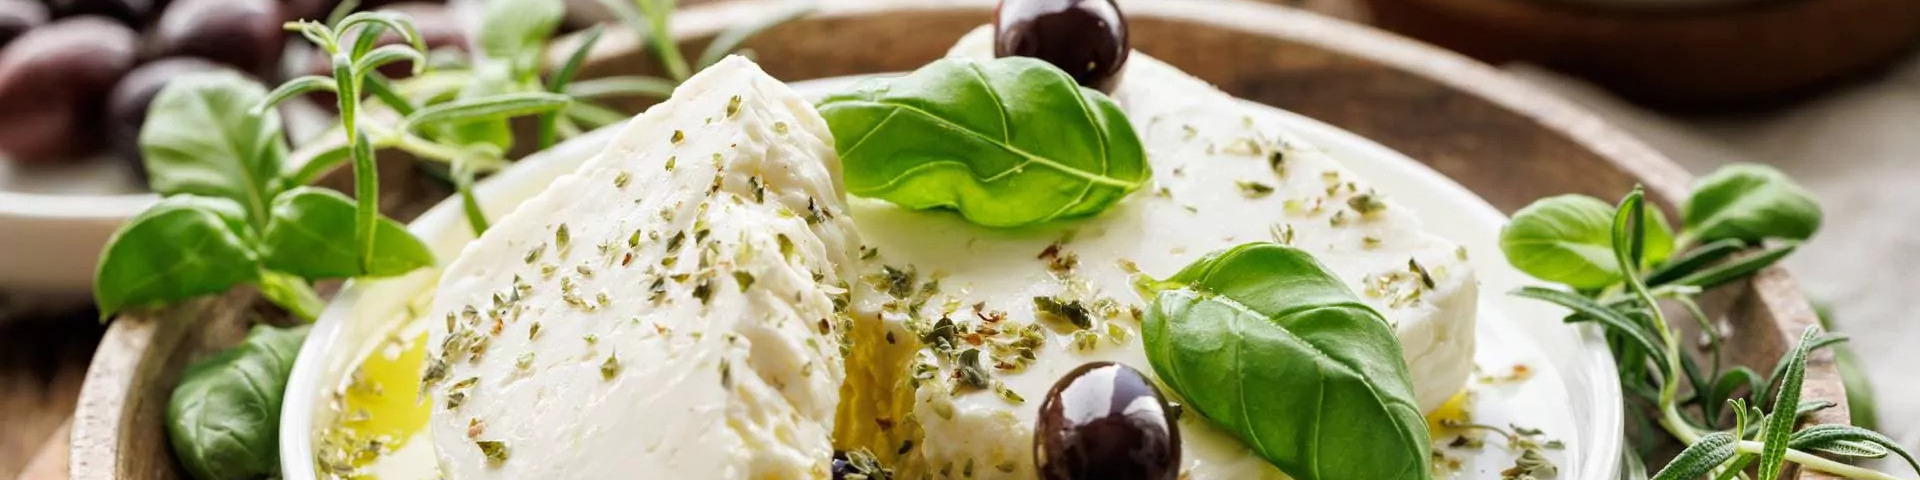 Fetakäse mit Oliven, Kräutern und Olivenöl